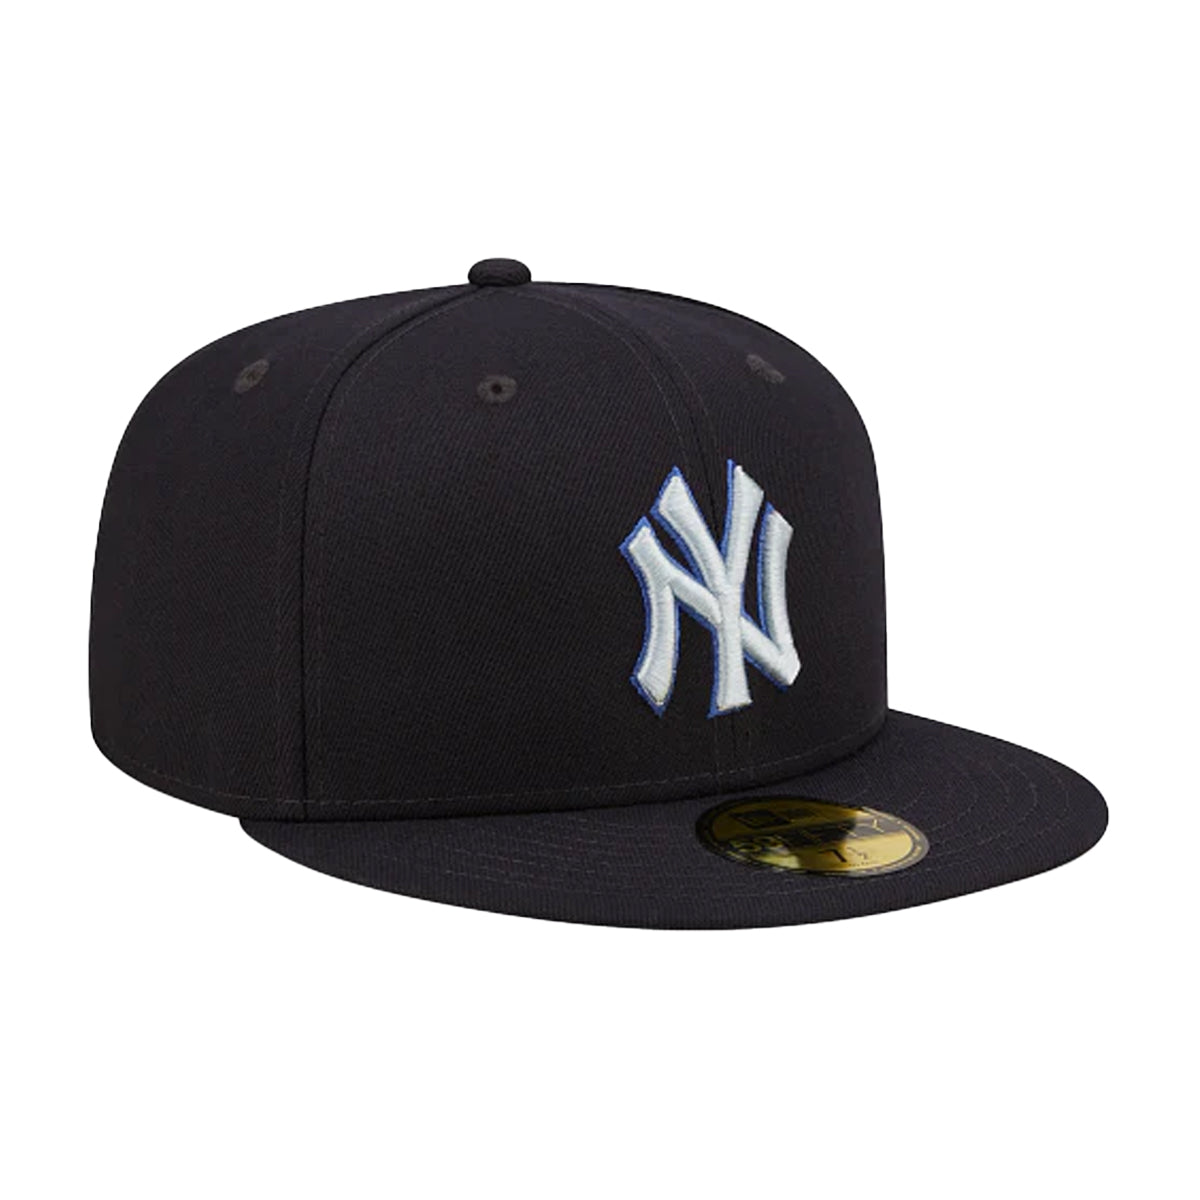 New York NY Yankees Baseball Cap Hat Navy Blue Adjustable Pre